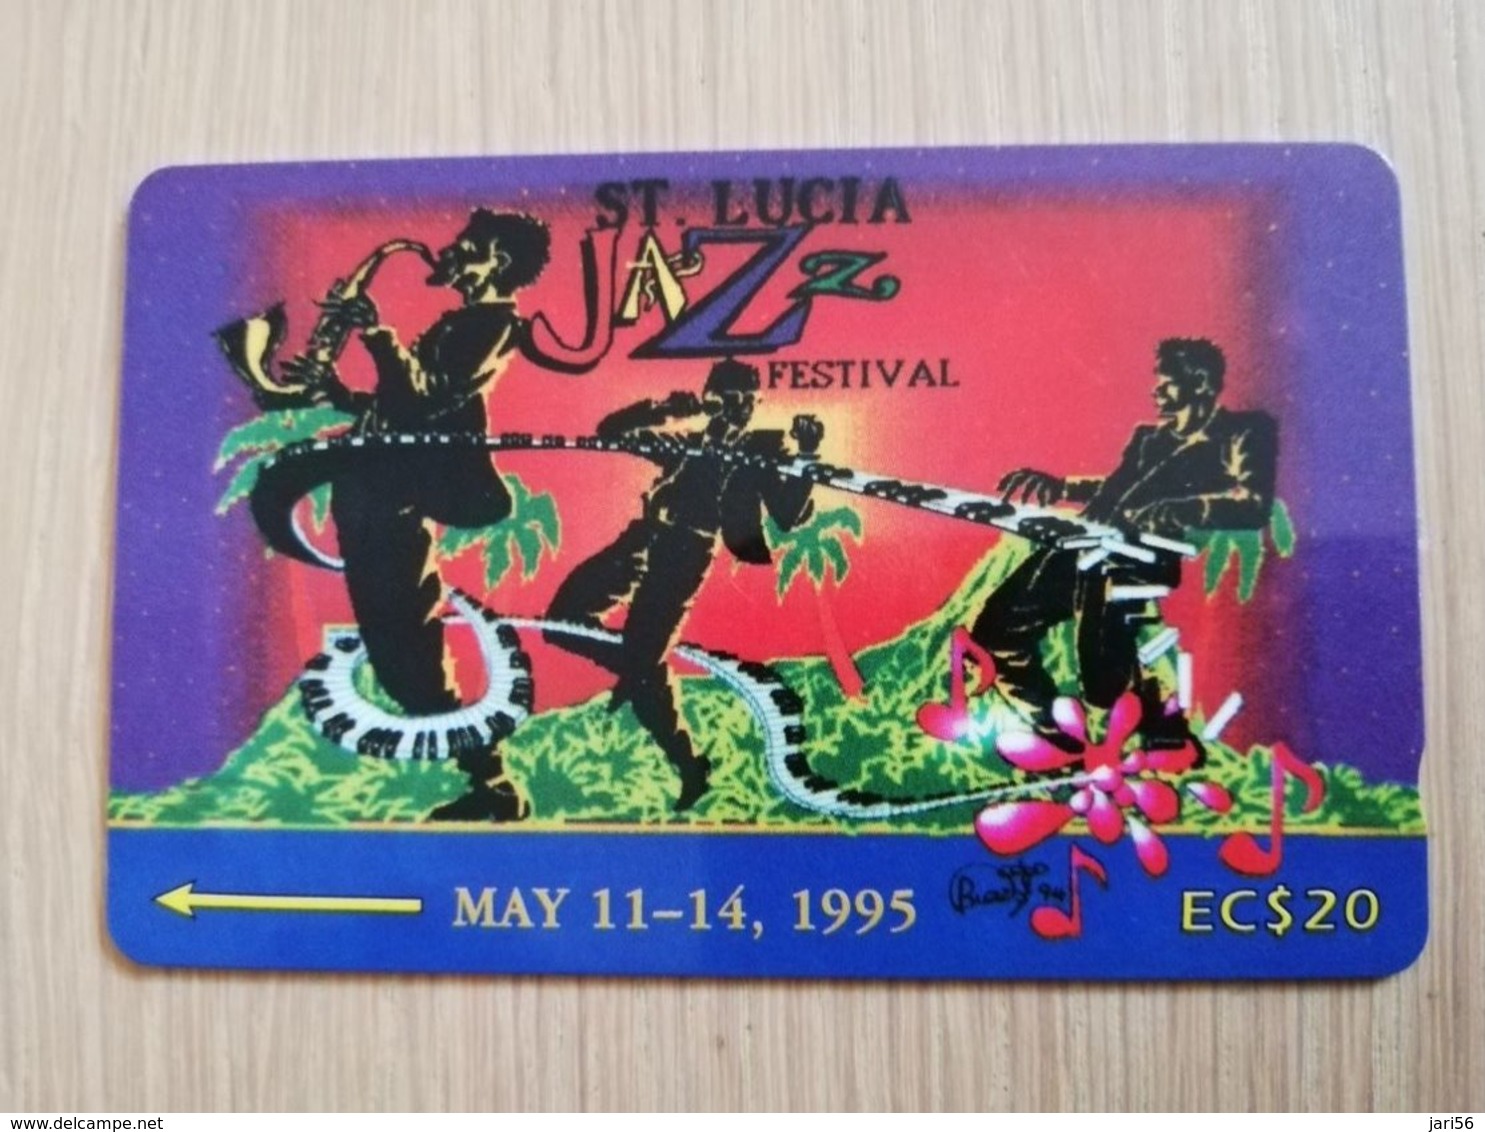 ST LUCIA    $ 20   CABLE & WIRELESS  STL-19A  19CSLA      JAZZ FESTIVAL 1995  Fine Used Card ** 2419** - Santa Lucía